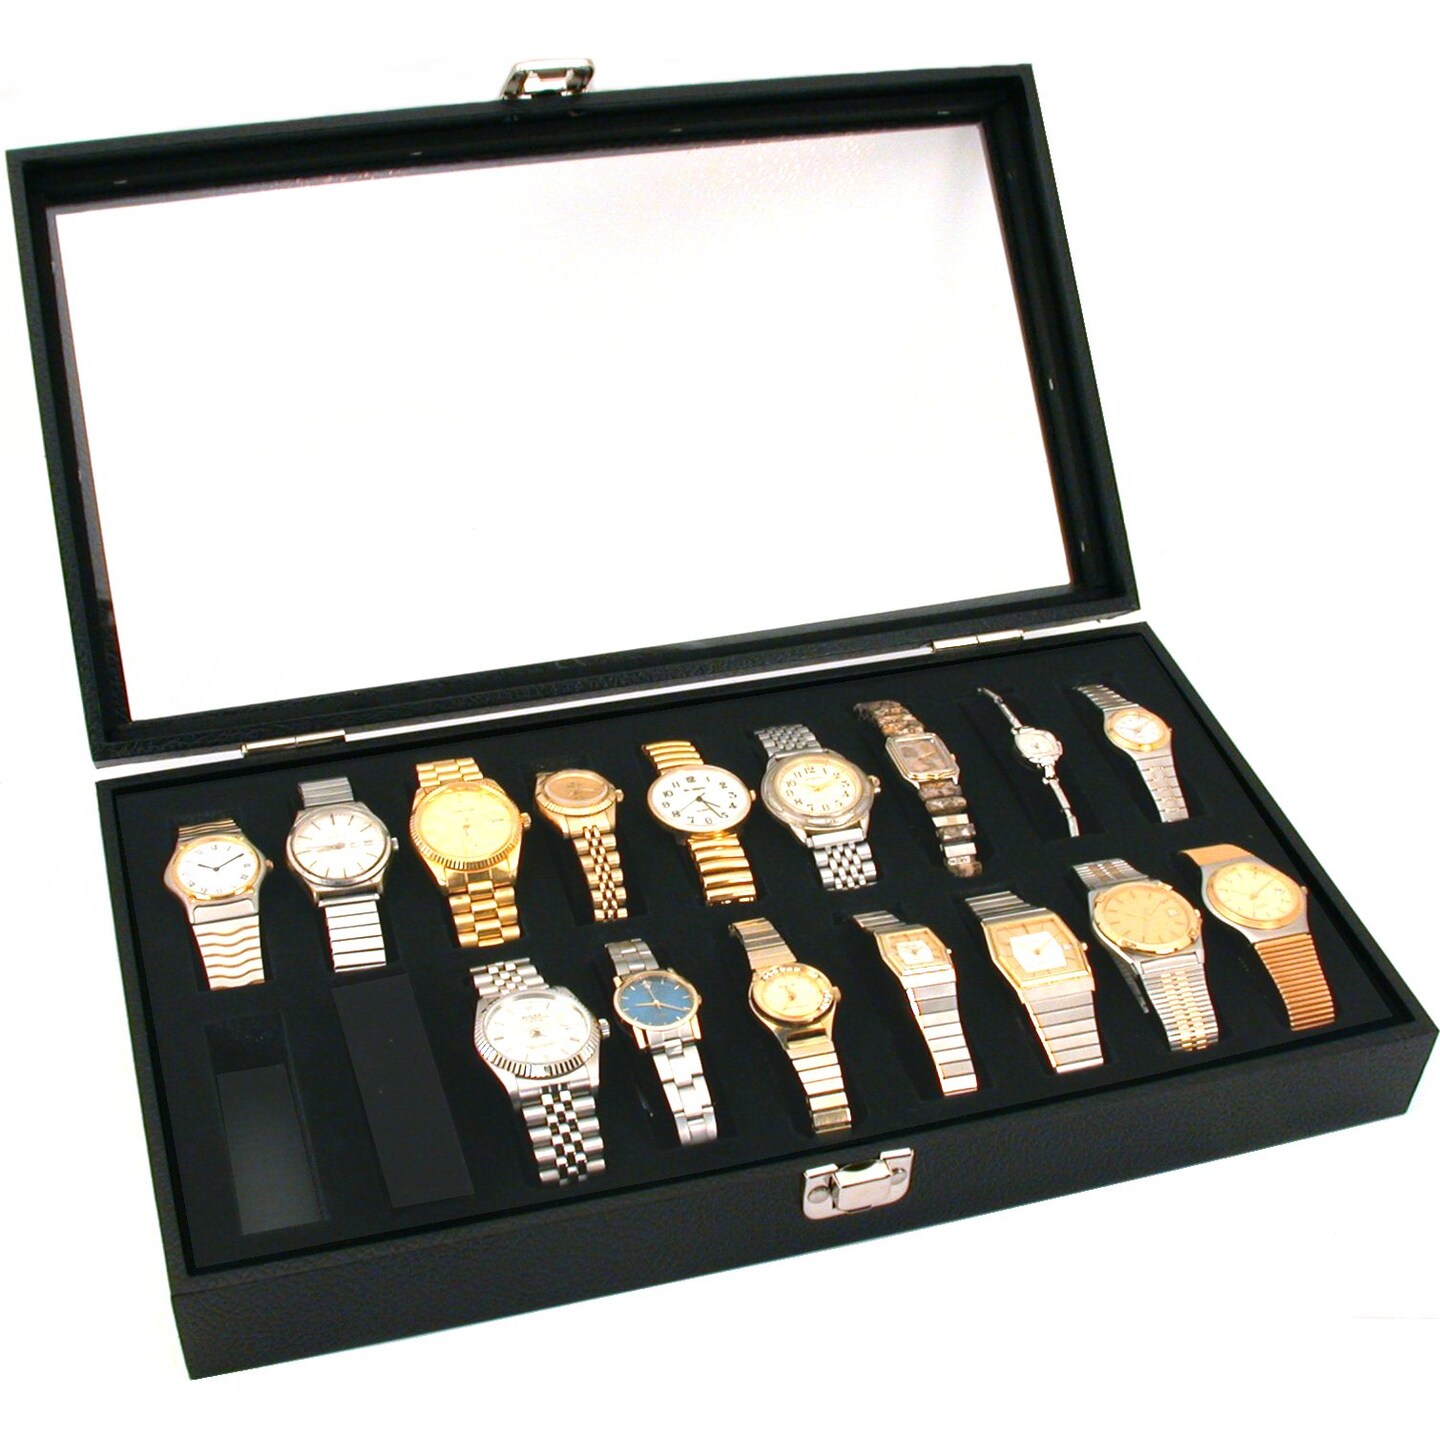 3 18pc Black Watch Travel Trays Showcase Display Case Unit W/ Glass Top